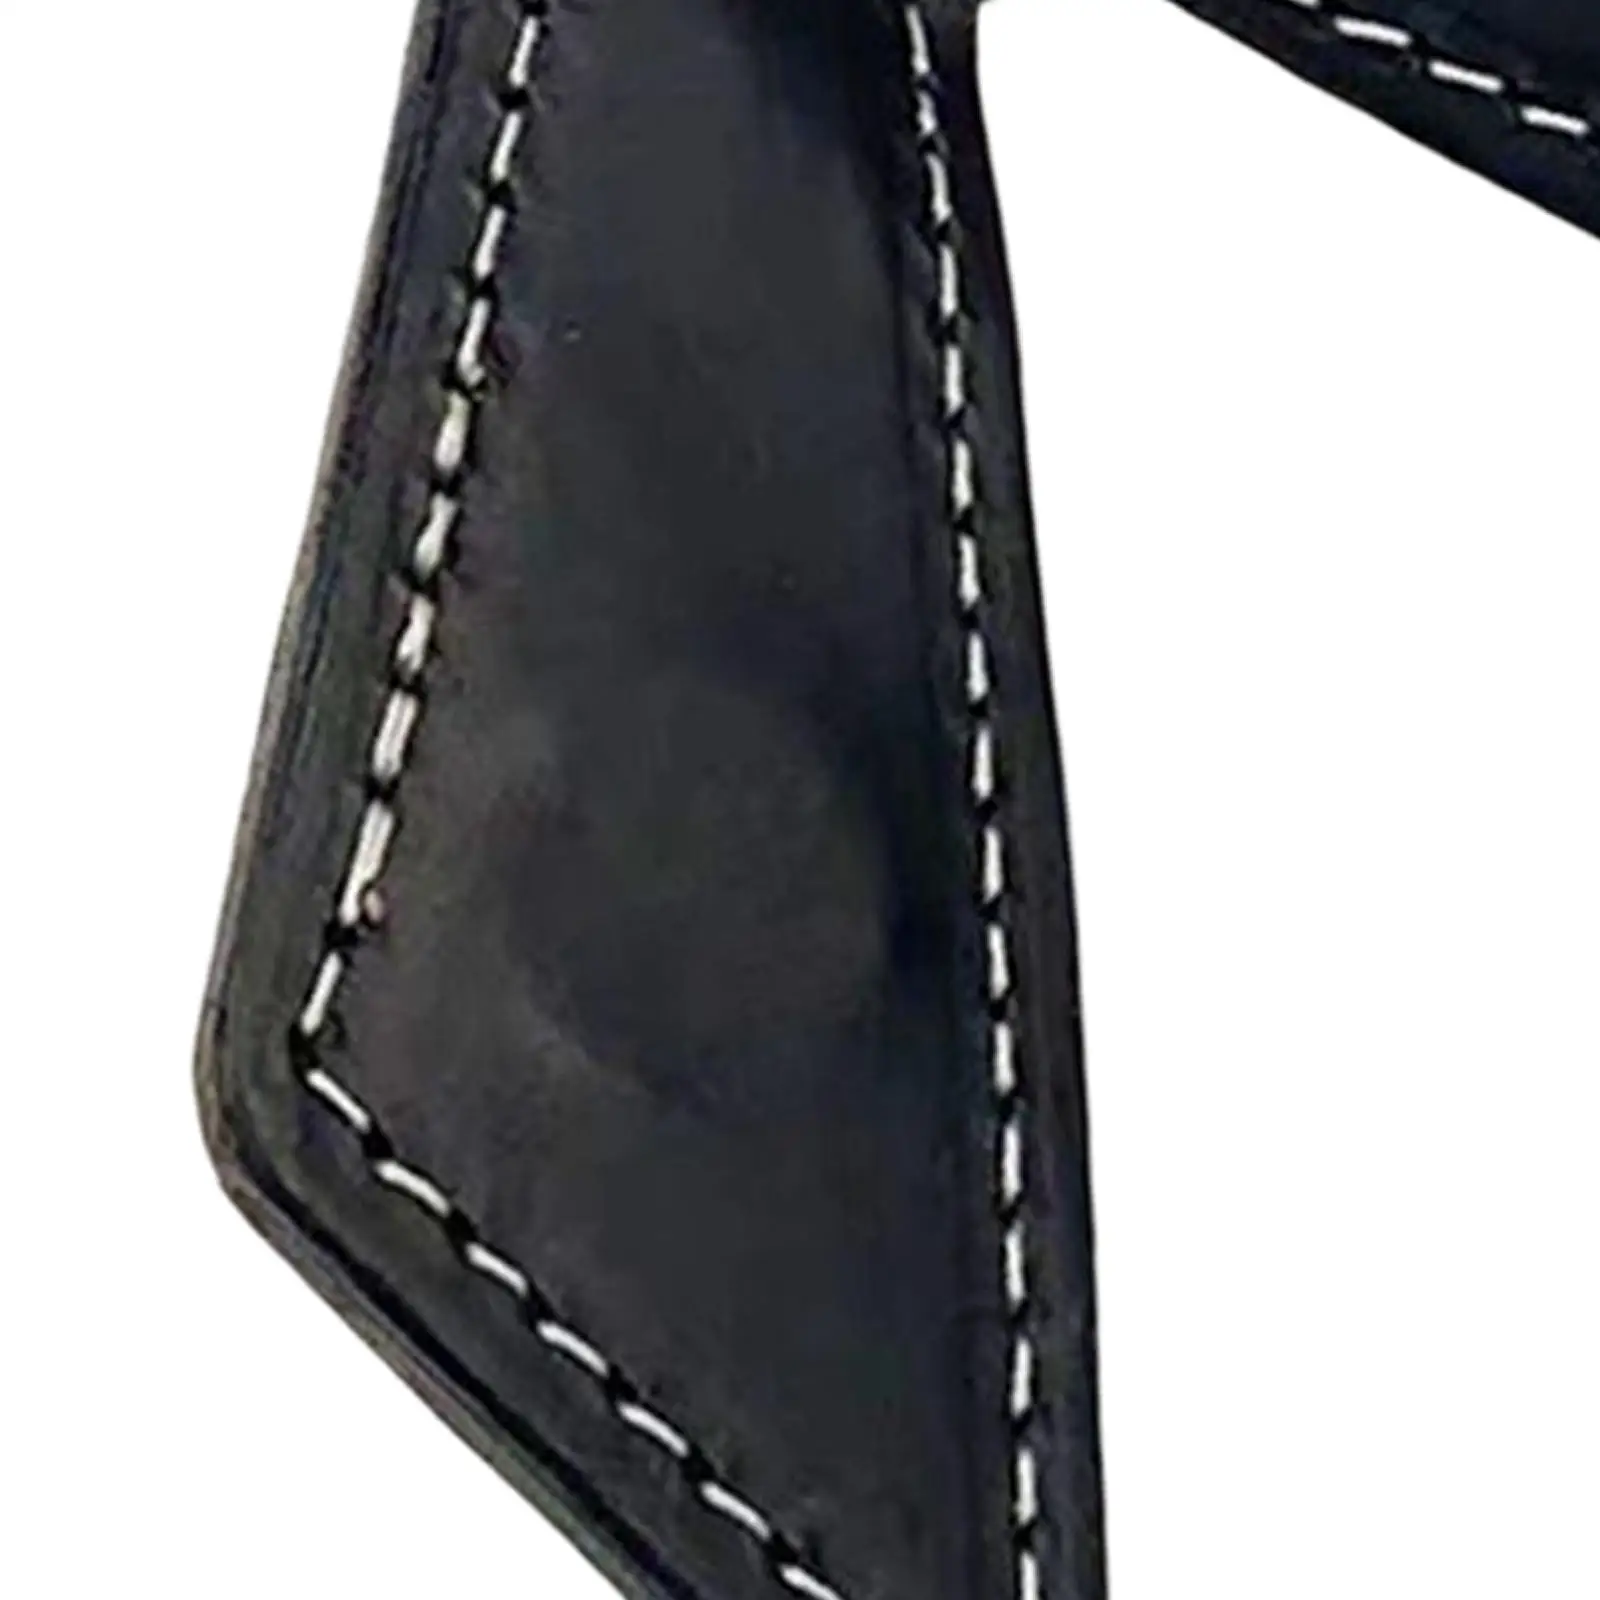 Trouser Pocket Chalk Clip Chalk Carrier Clip Lightweight Pocket Clip Compact